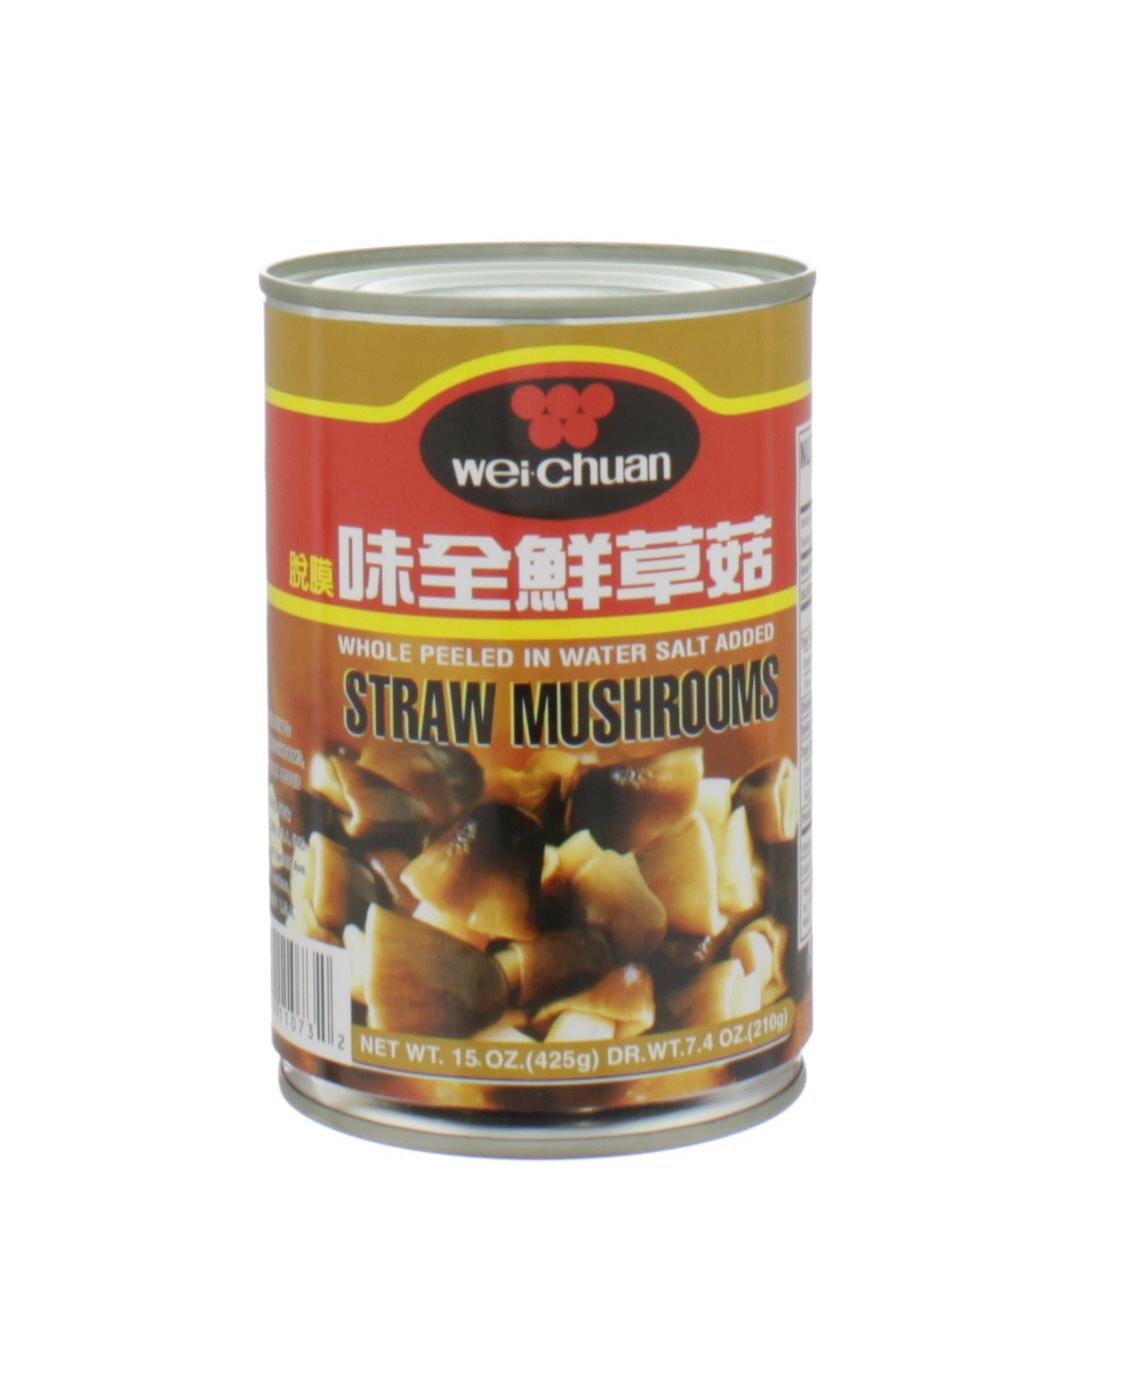 Neutral Flavor Tasty Joy Straw Mushroom